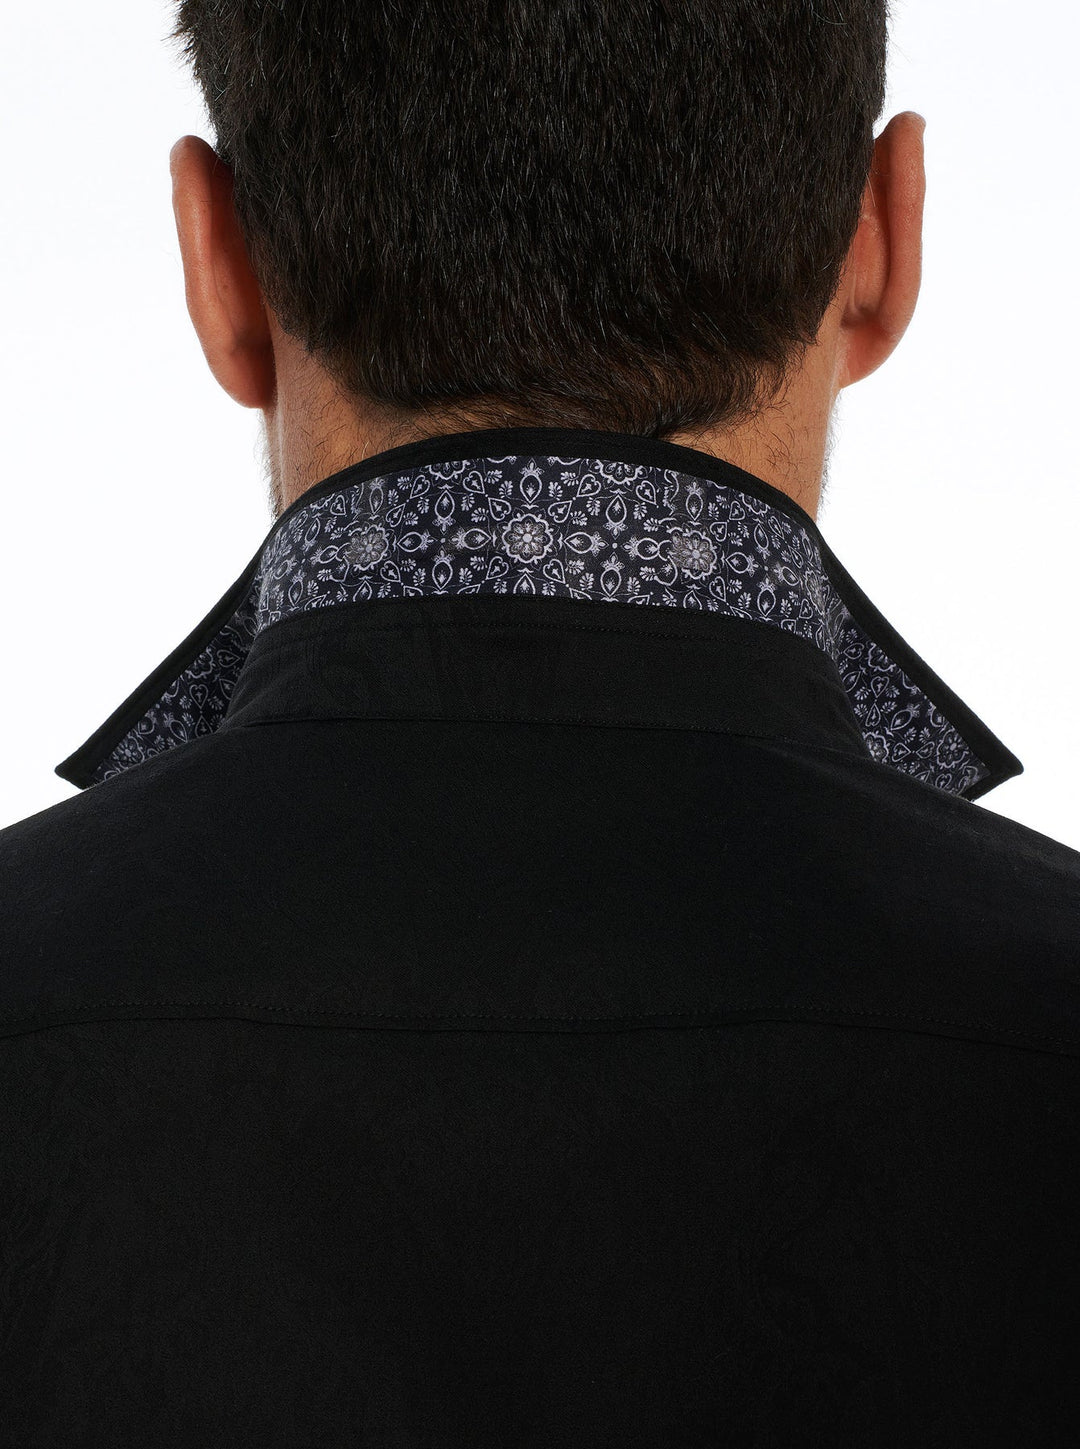 Robert Graham Highland Cotton Black Long Sleeve Woven Shirt-Black